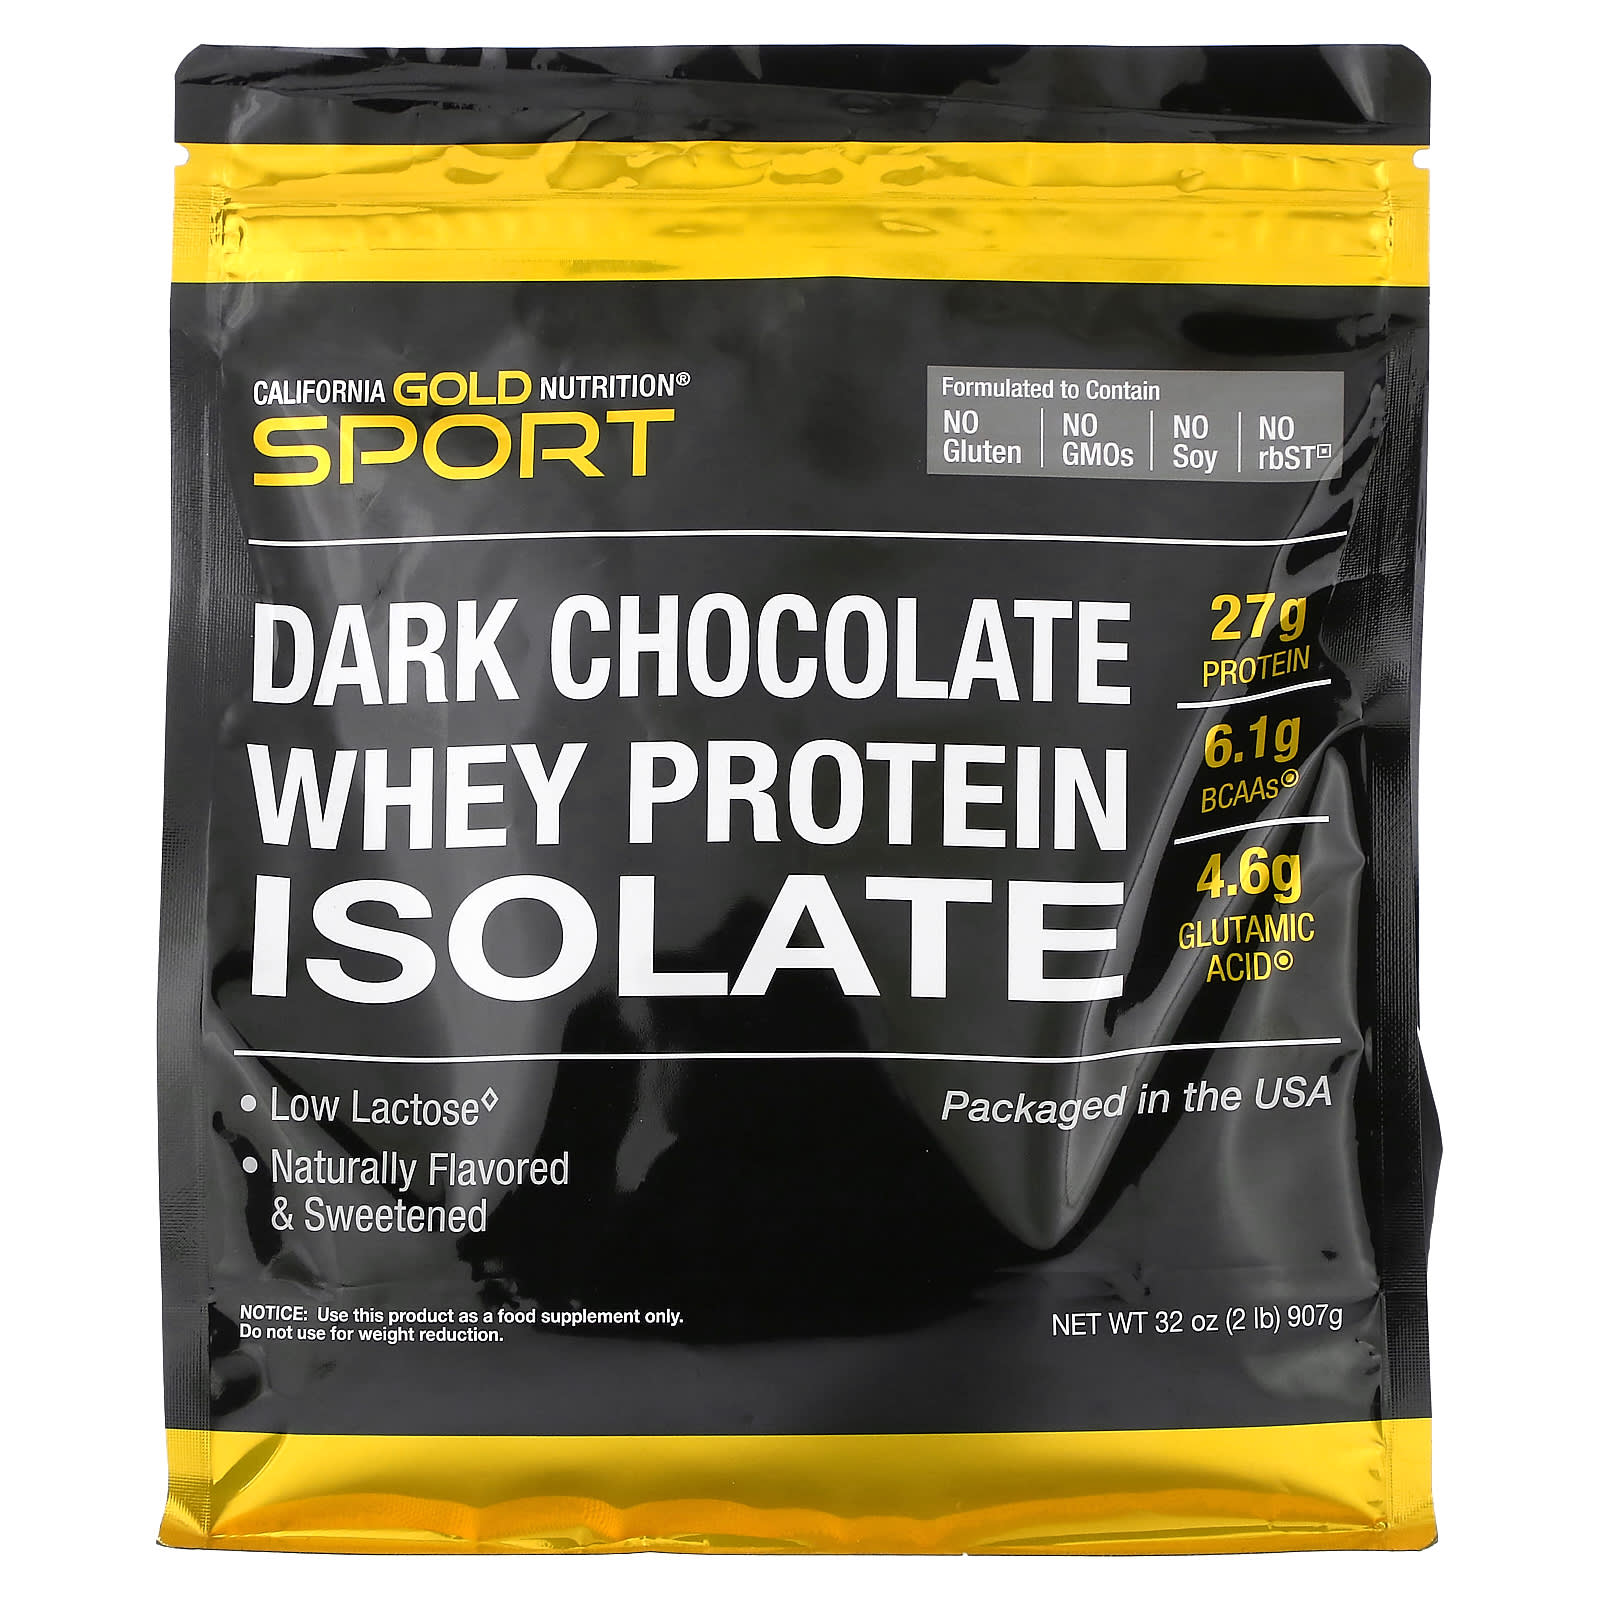 California Gold Nutrition-SPORT - Dark Chocolate Whey Protein Isolate-2 lbs (907 g)